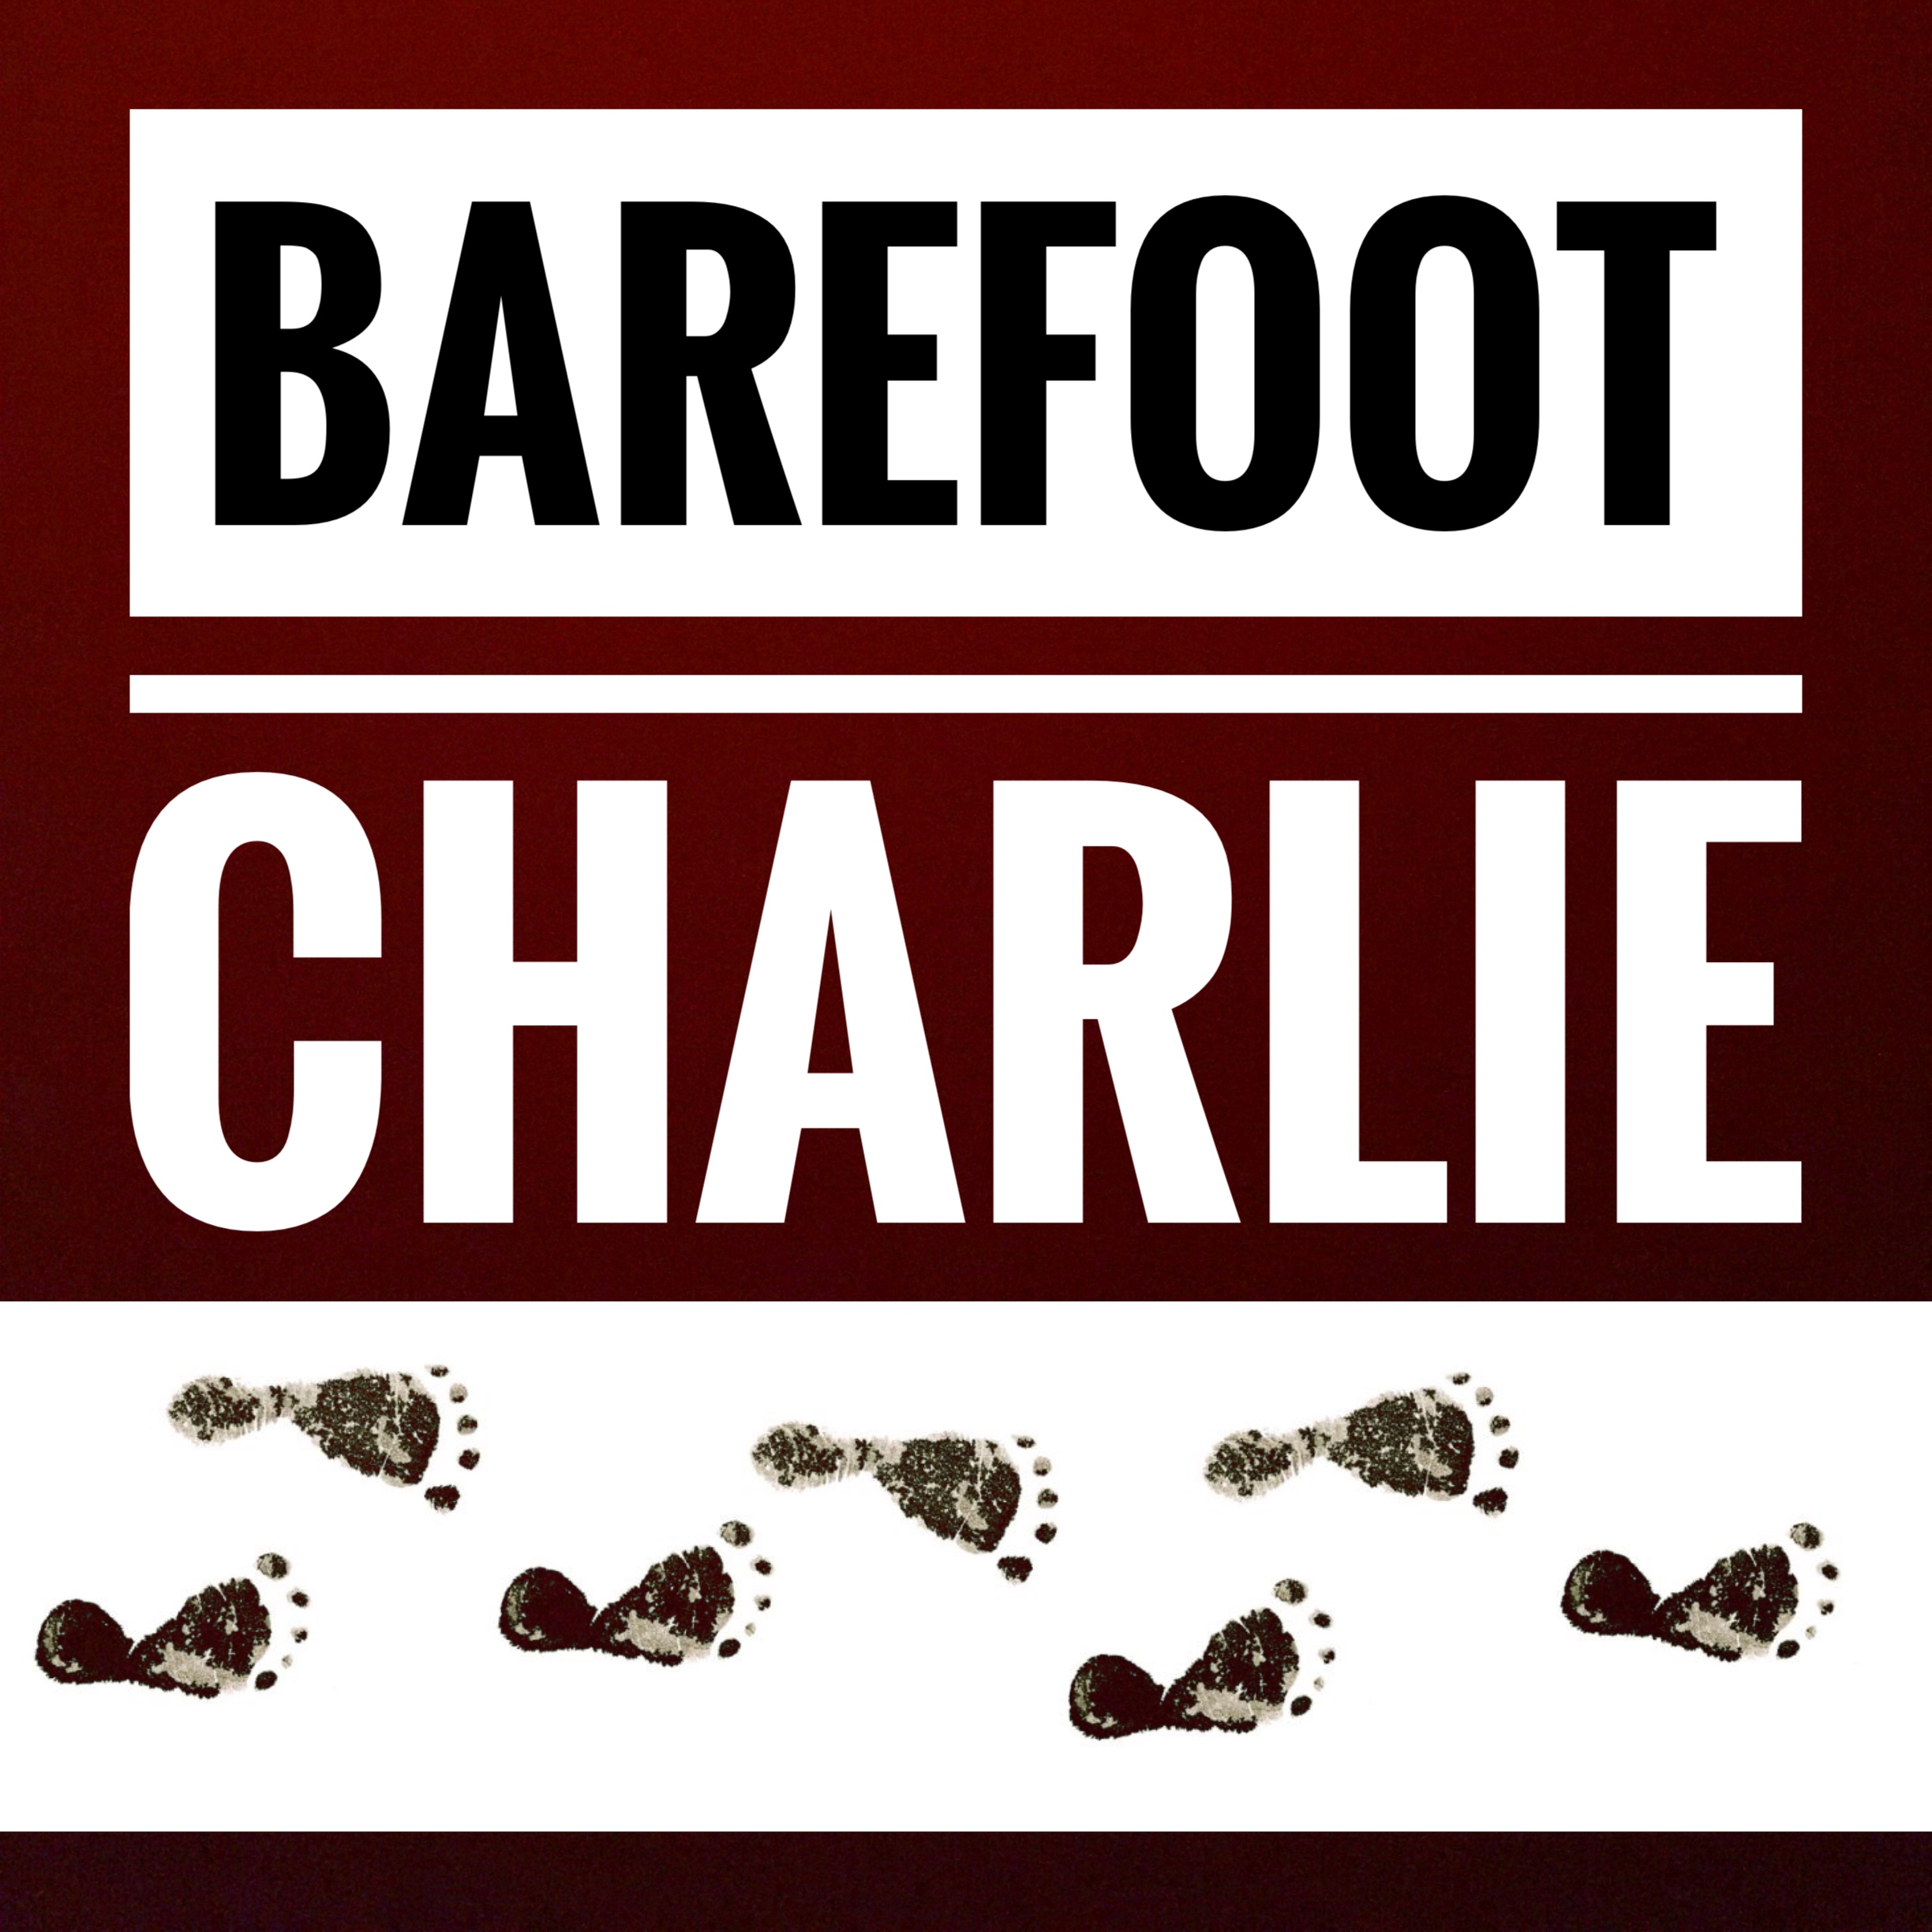 Barefoot Charlie